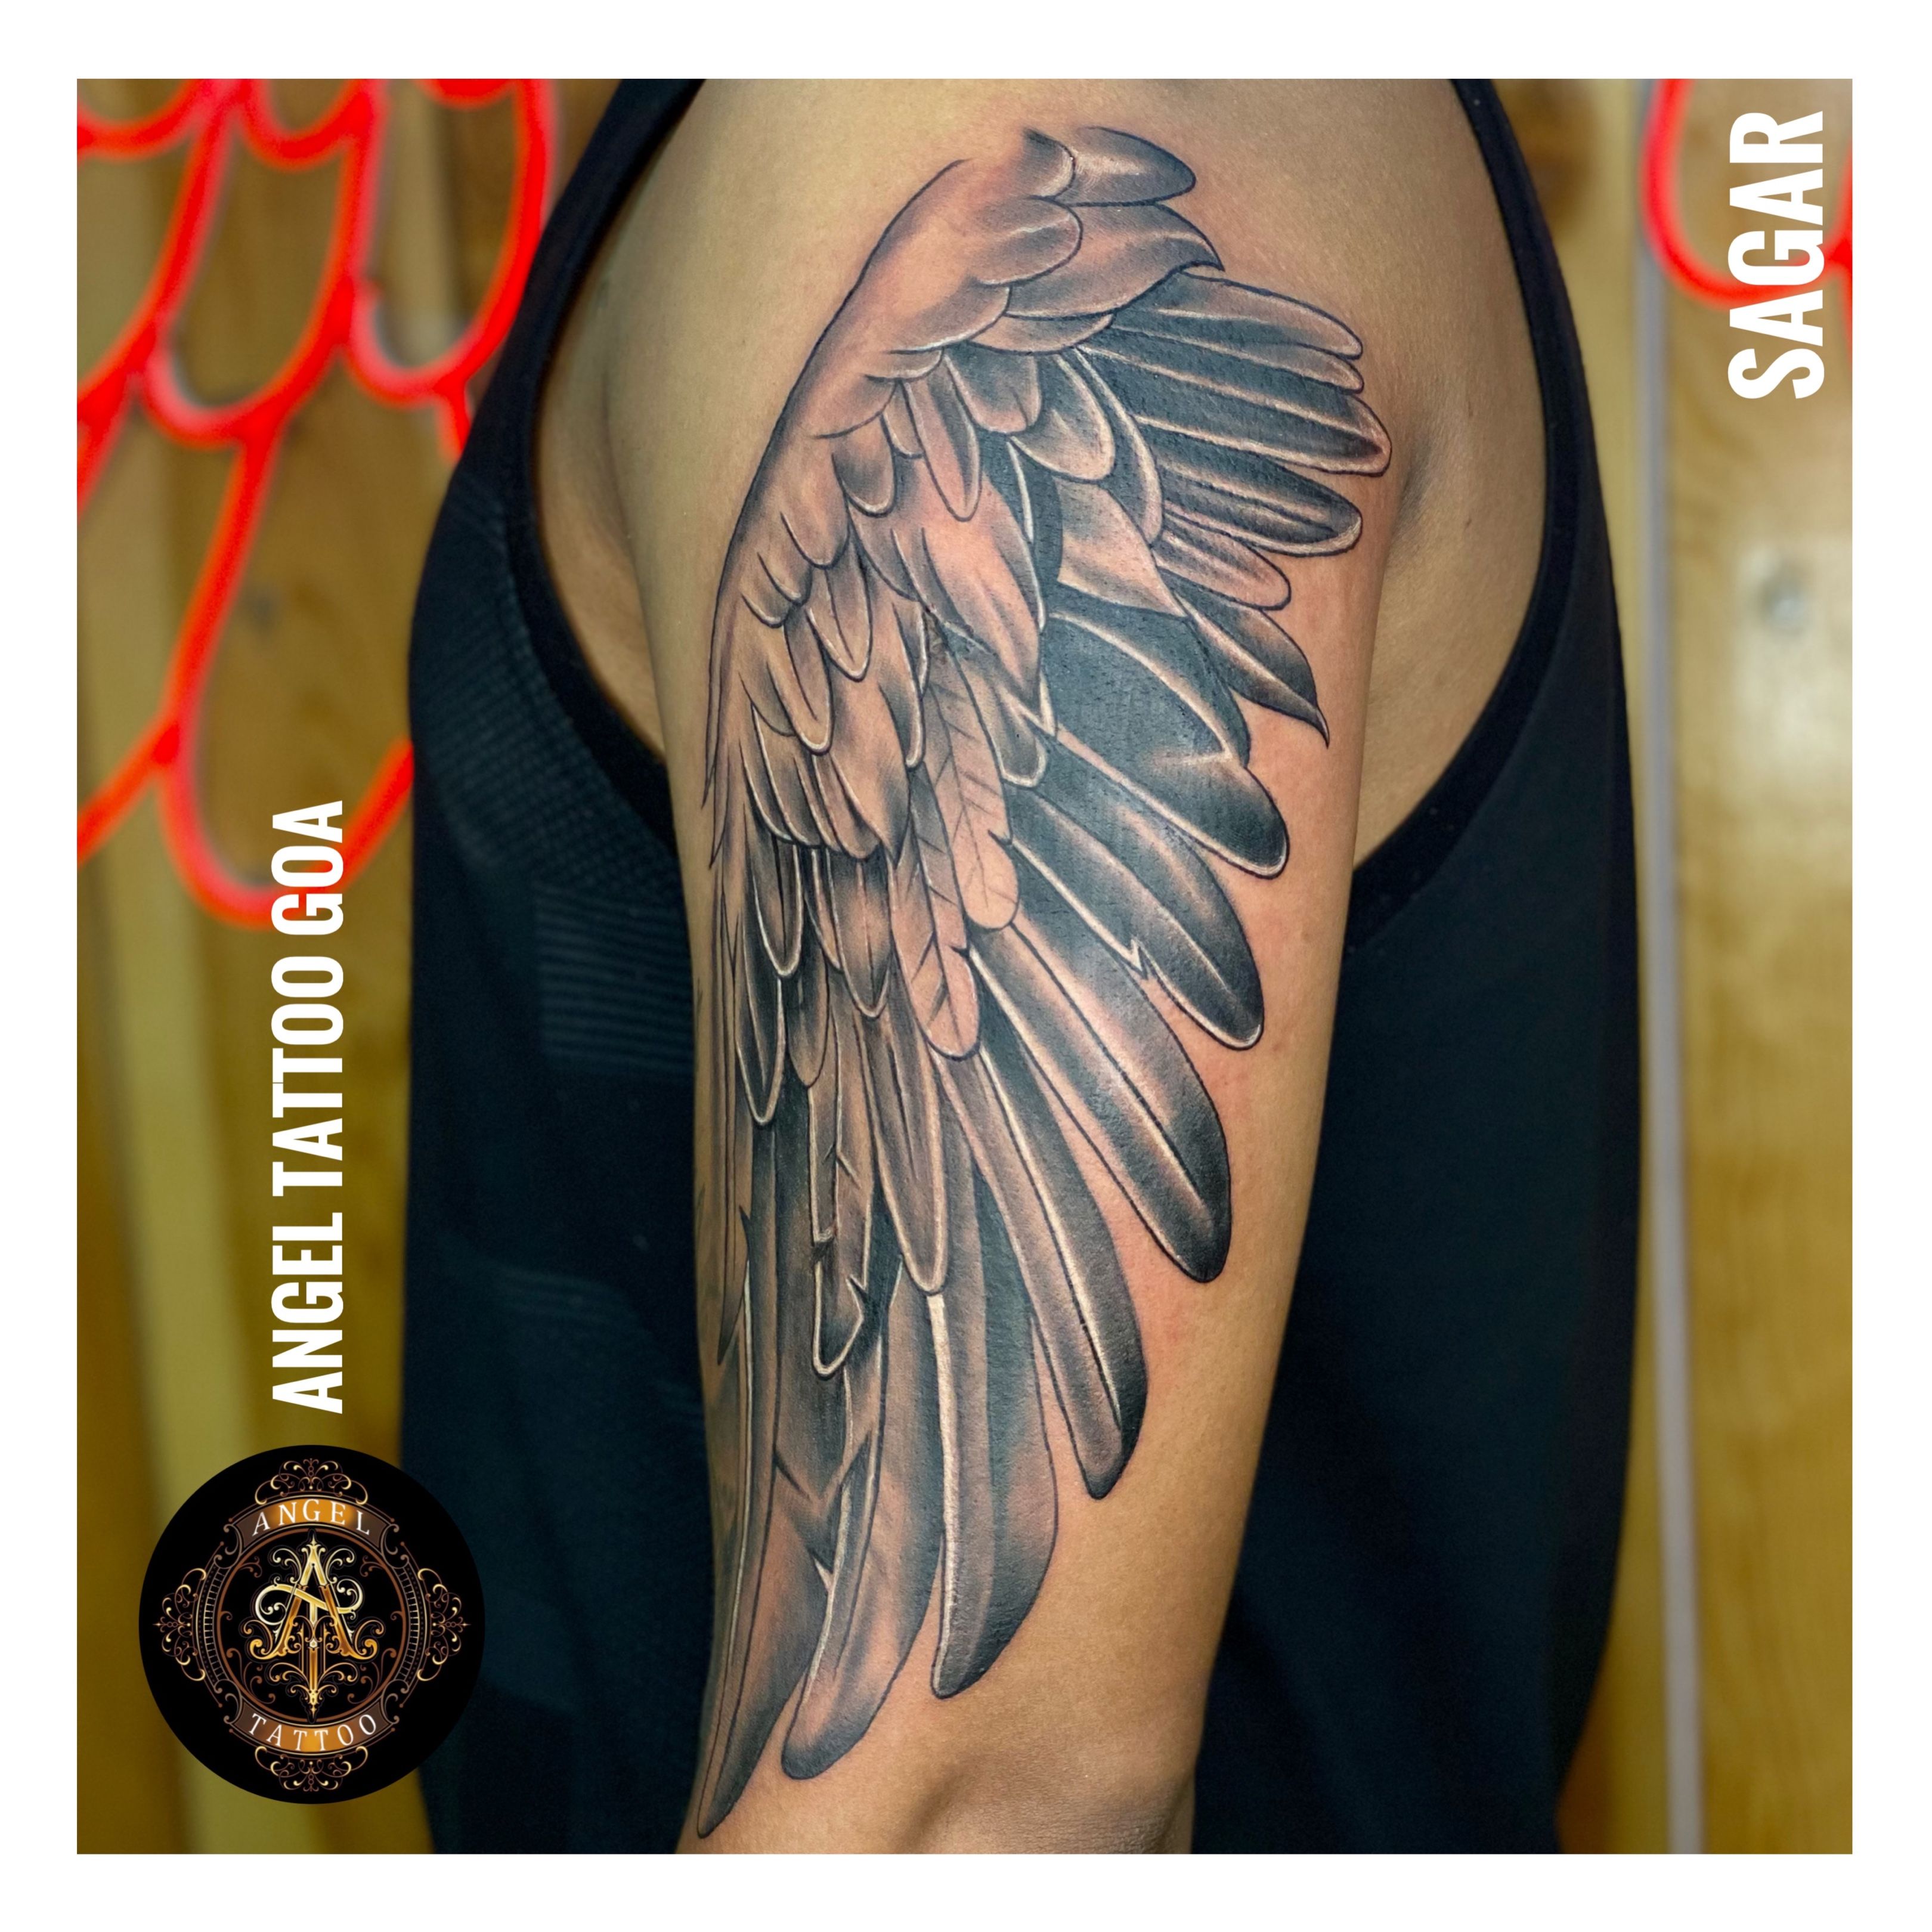 Angel Tattoo Studio Goa - Anchor Tattoo... • • Tattoo At  @angeltattoostudiogoa • • Contact For Booking 9960107775/9834870701 • •  Official Wepsite angeltattoostudiogoa.com • • #anchortattoo #anchor #tattoo  #goatattooartist #goatattoos #goatattooshop ...